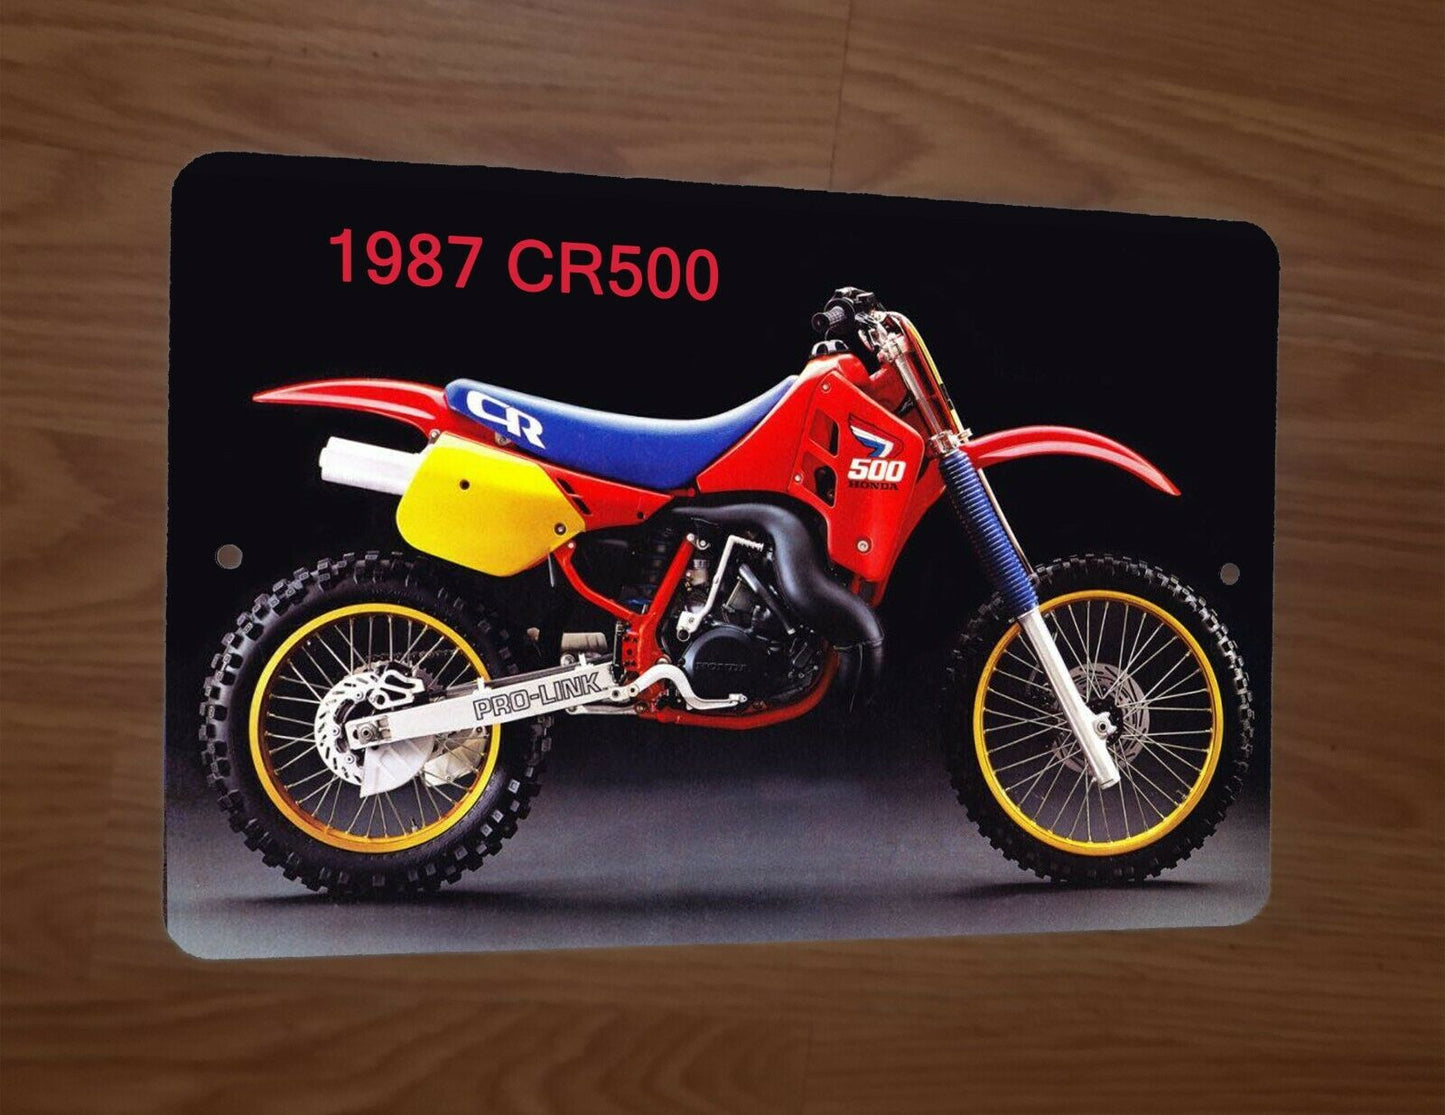 1987 Honda CR500 Motocross Motorcycle Dirt Bike Photo 8x12 Metal Wall Sign Garage Poster